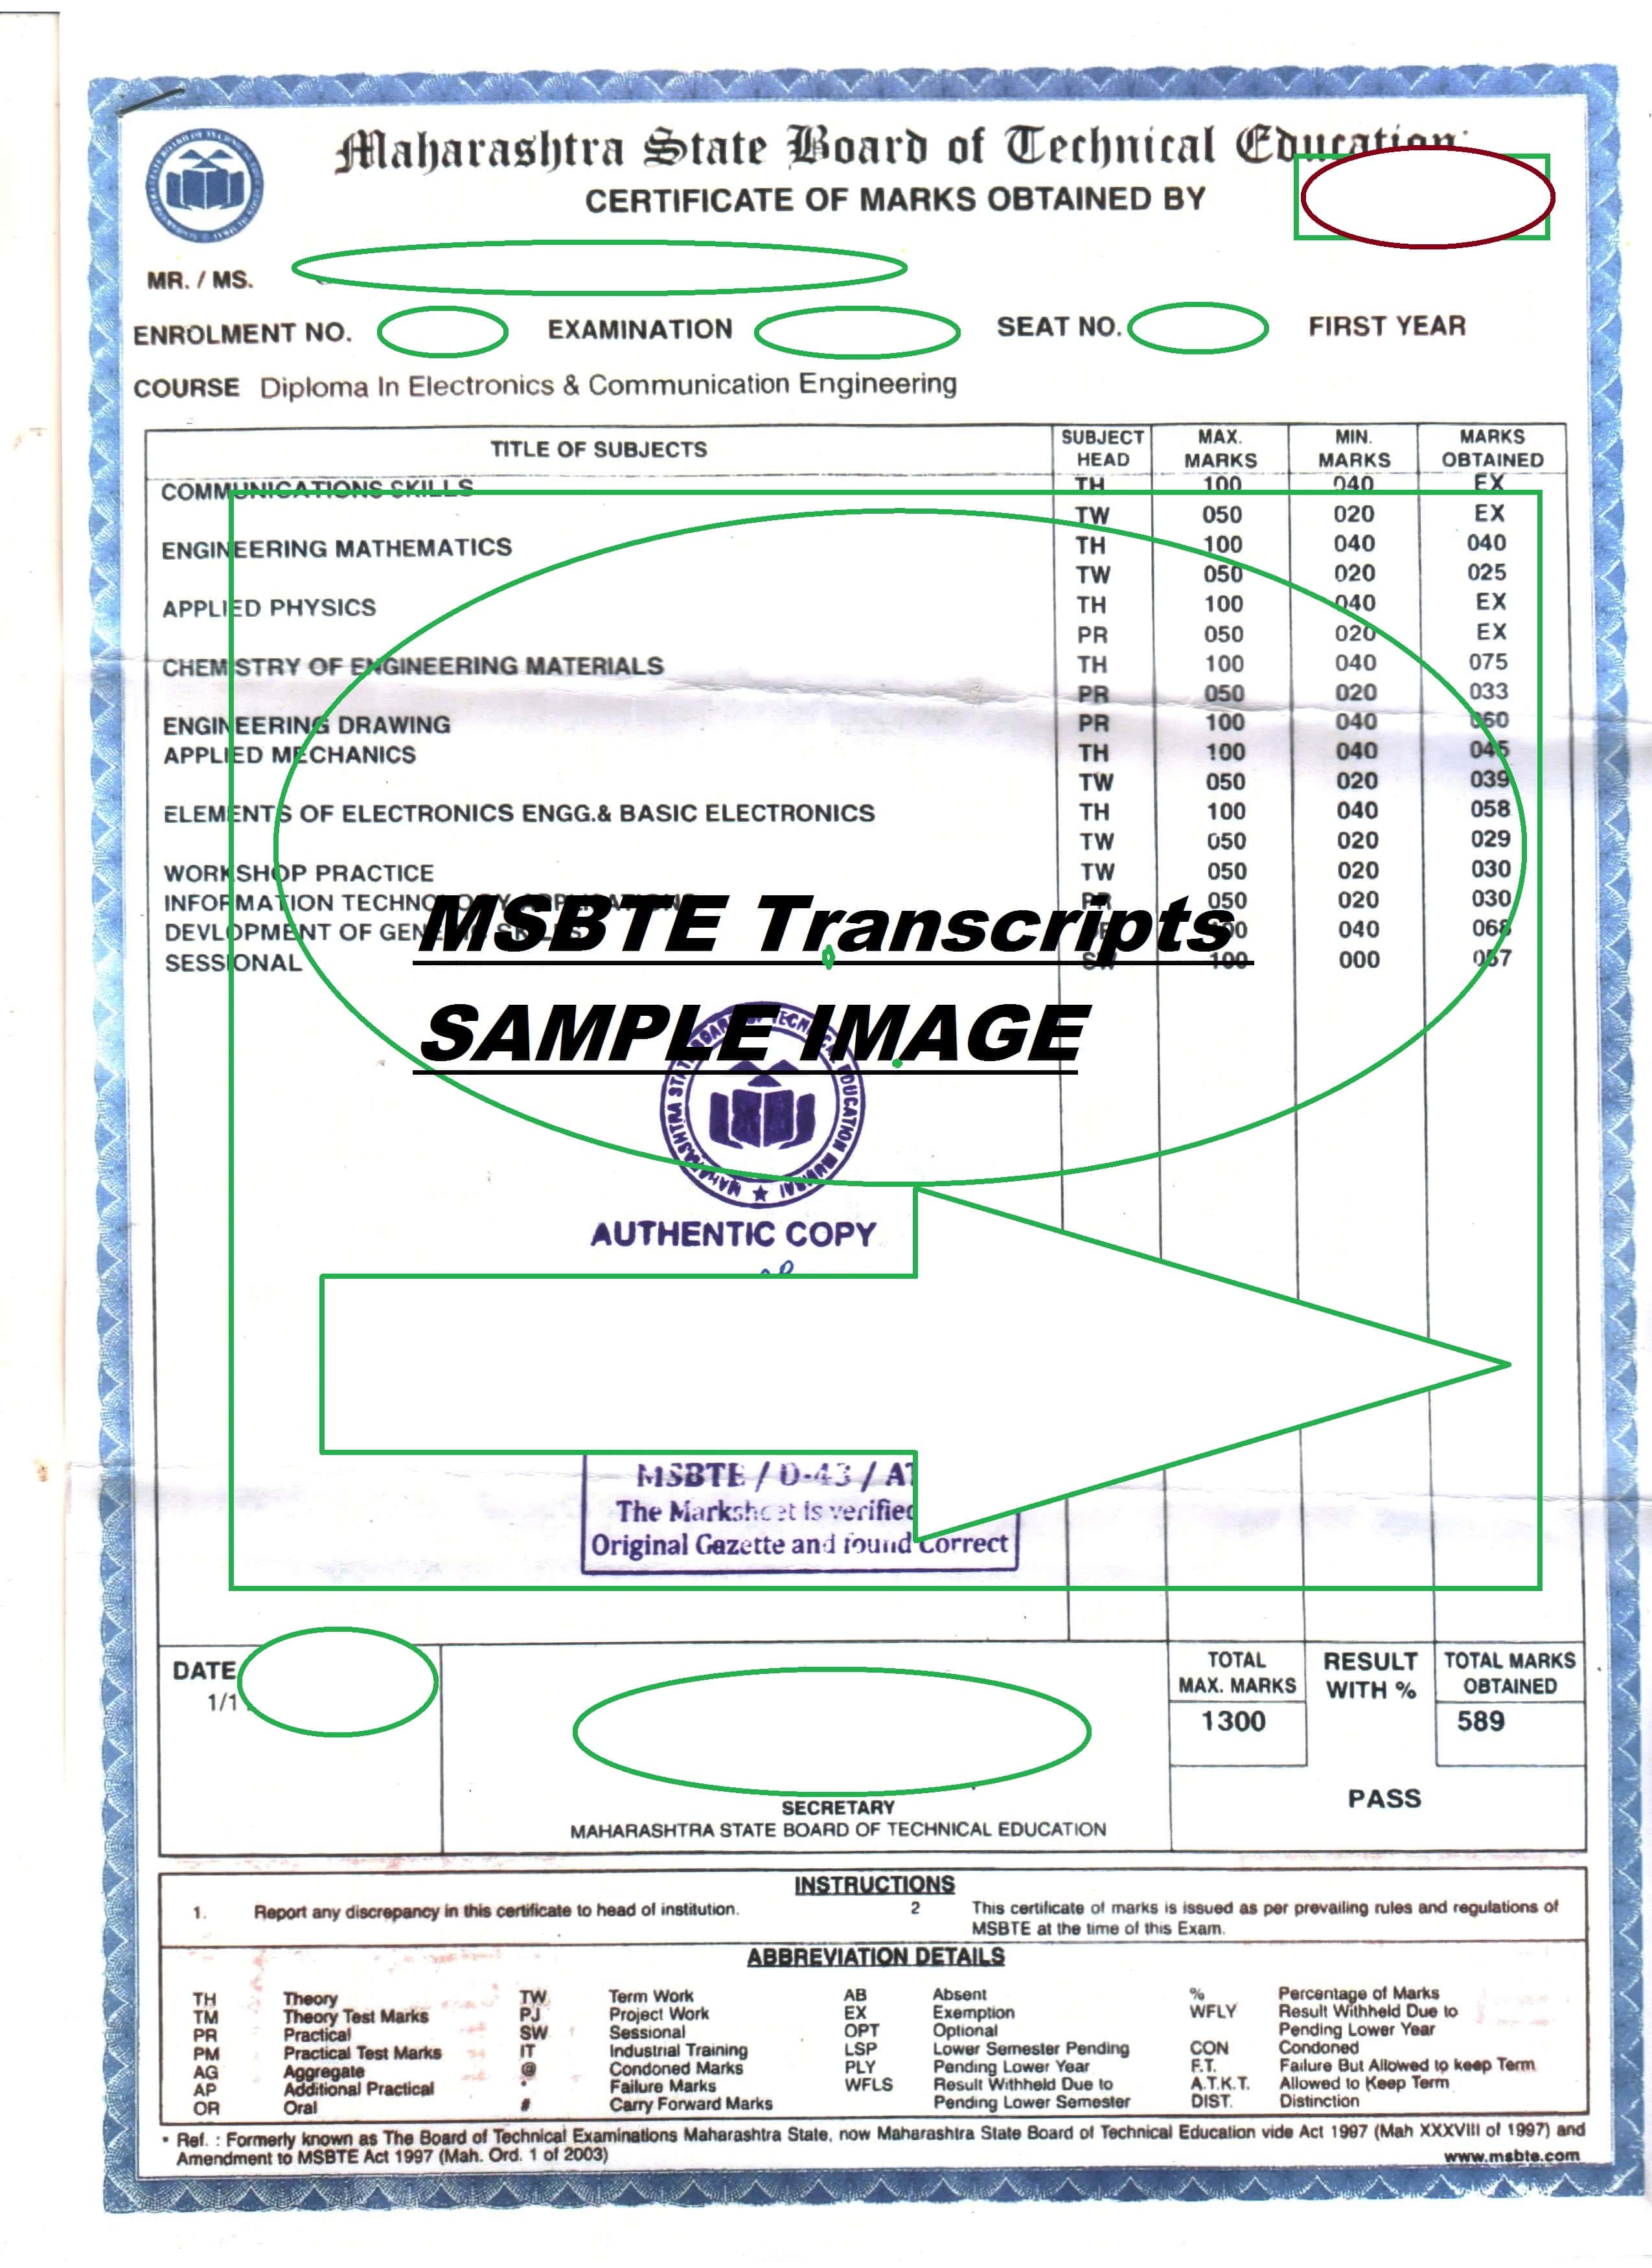 MSBTE Transcripts Sample Image - officialtranscript.in-min